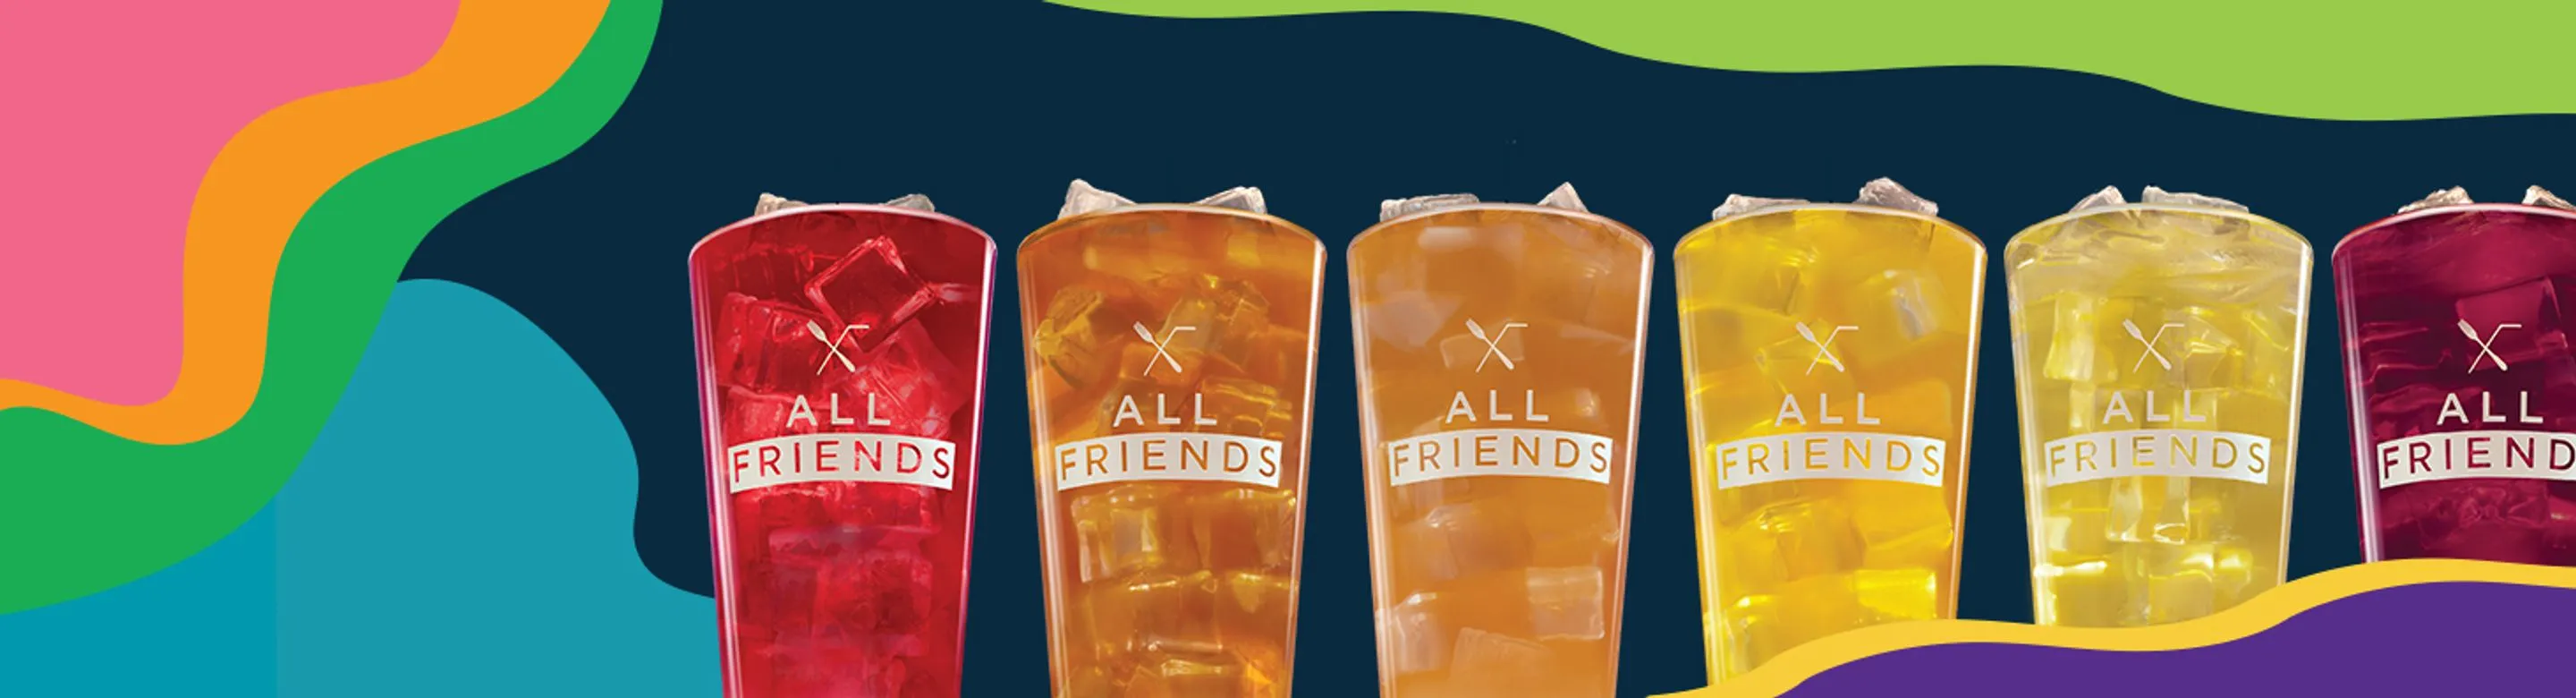 All Friends Beverage